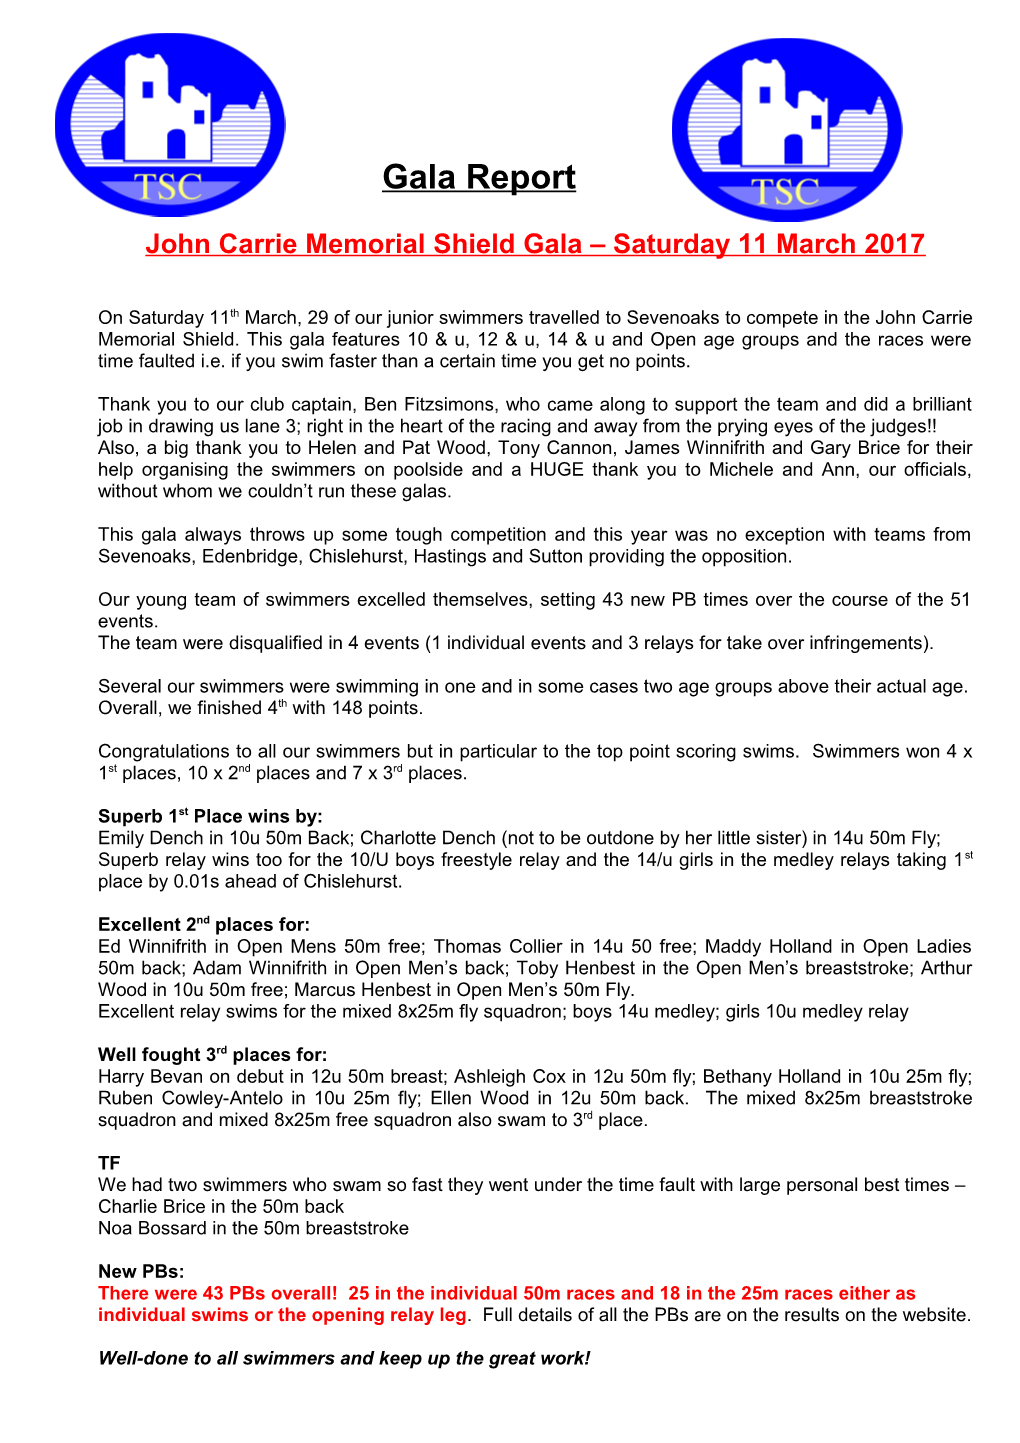 John Carrie Memorial Shield Gala Saturday 11 March 2017